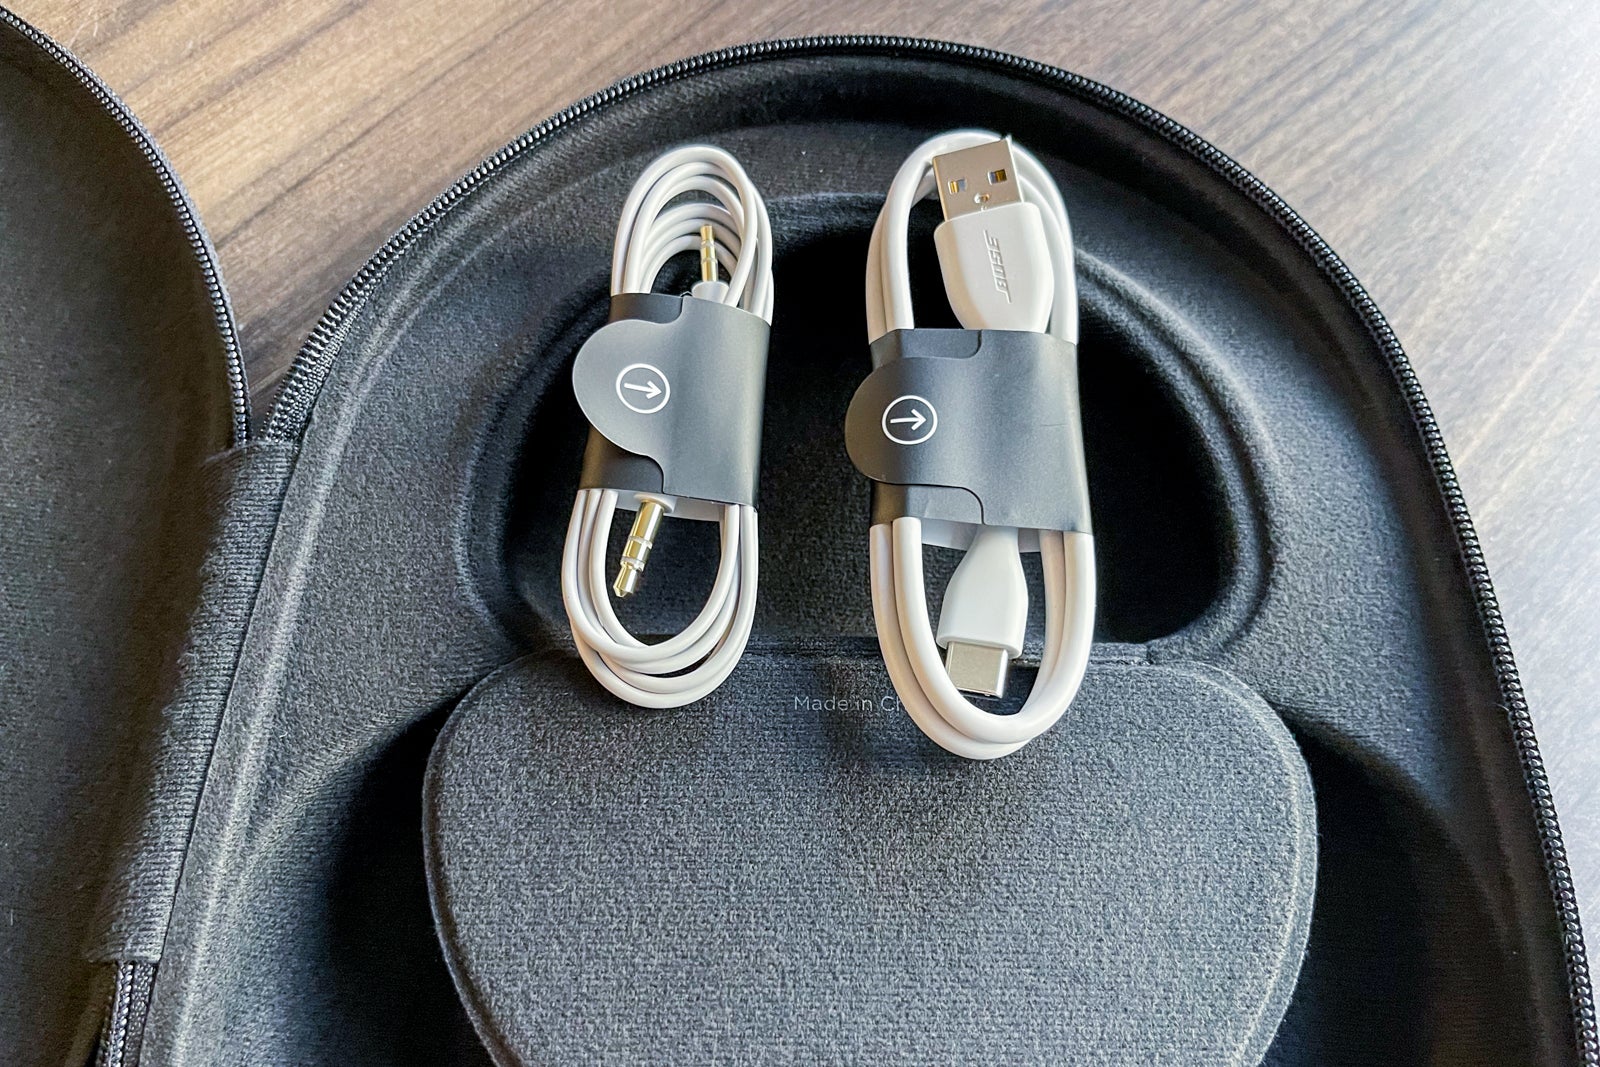 Bose 700 headphones wires